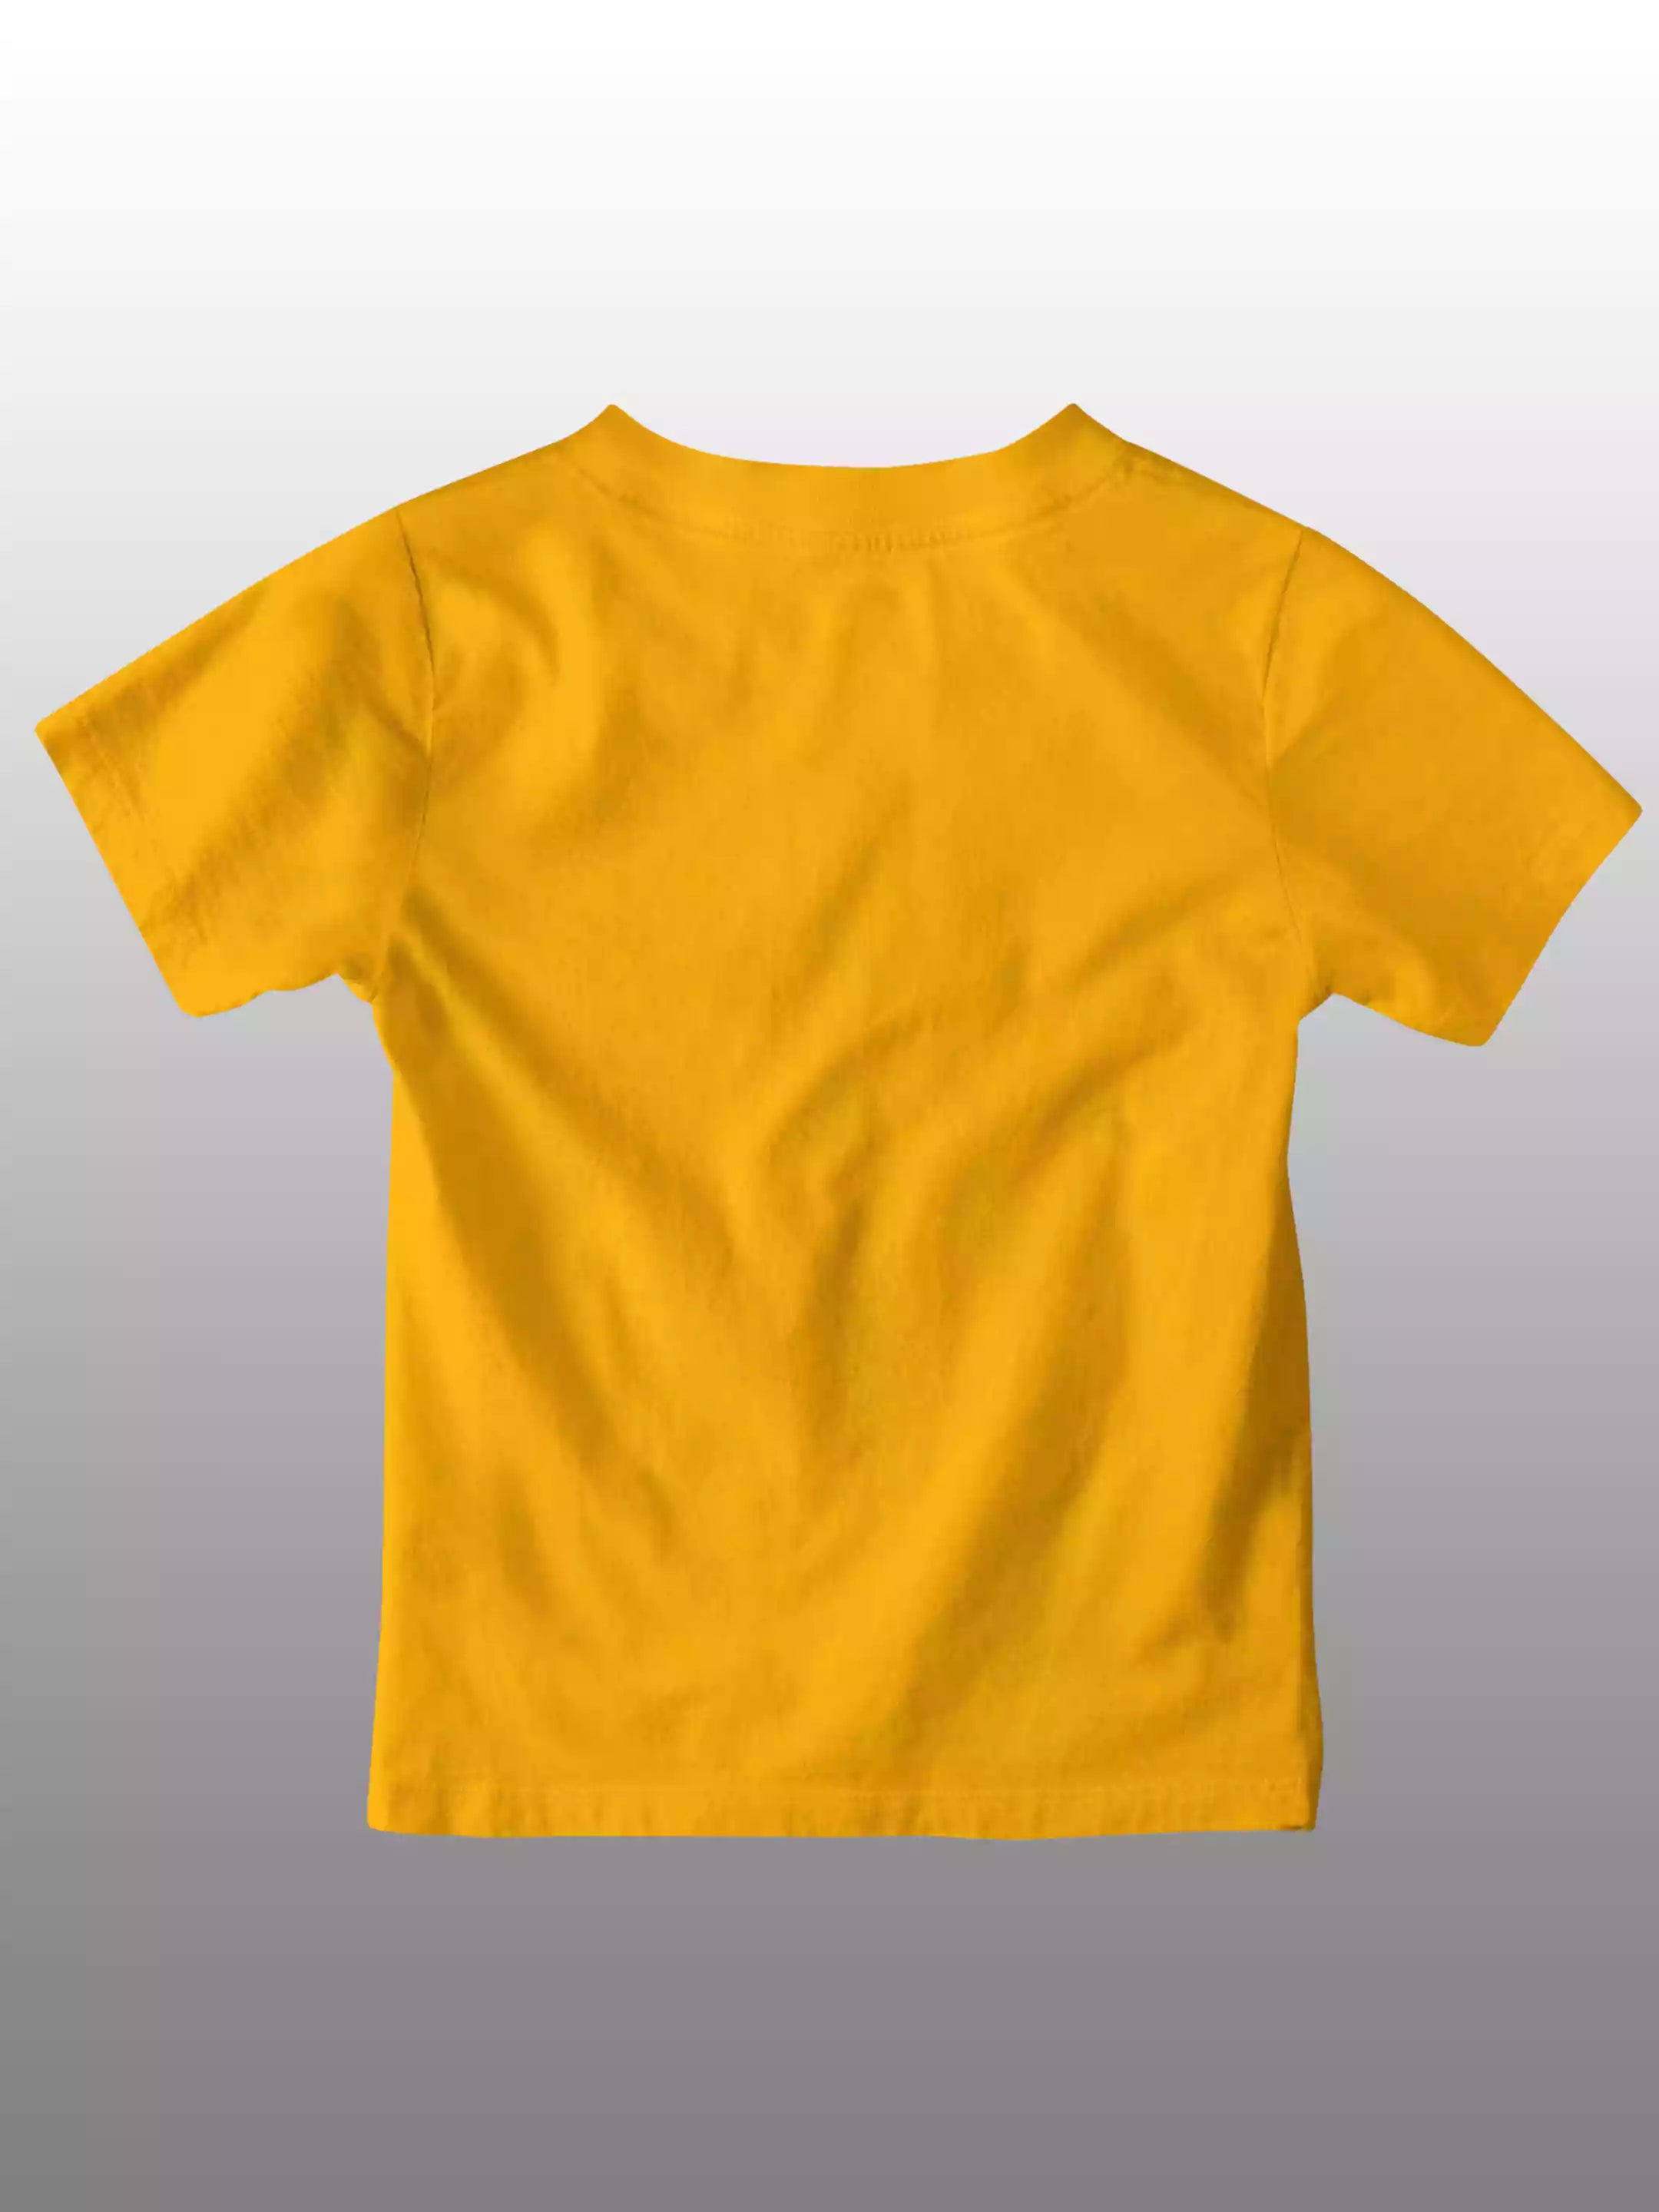 Tu tuza bagh - Sukhiaatma Unisex Graphic Printed Kids T-shirt